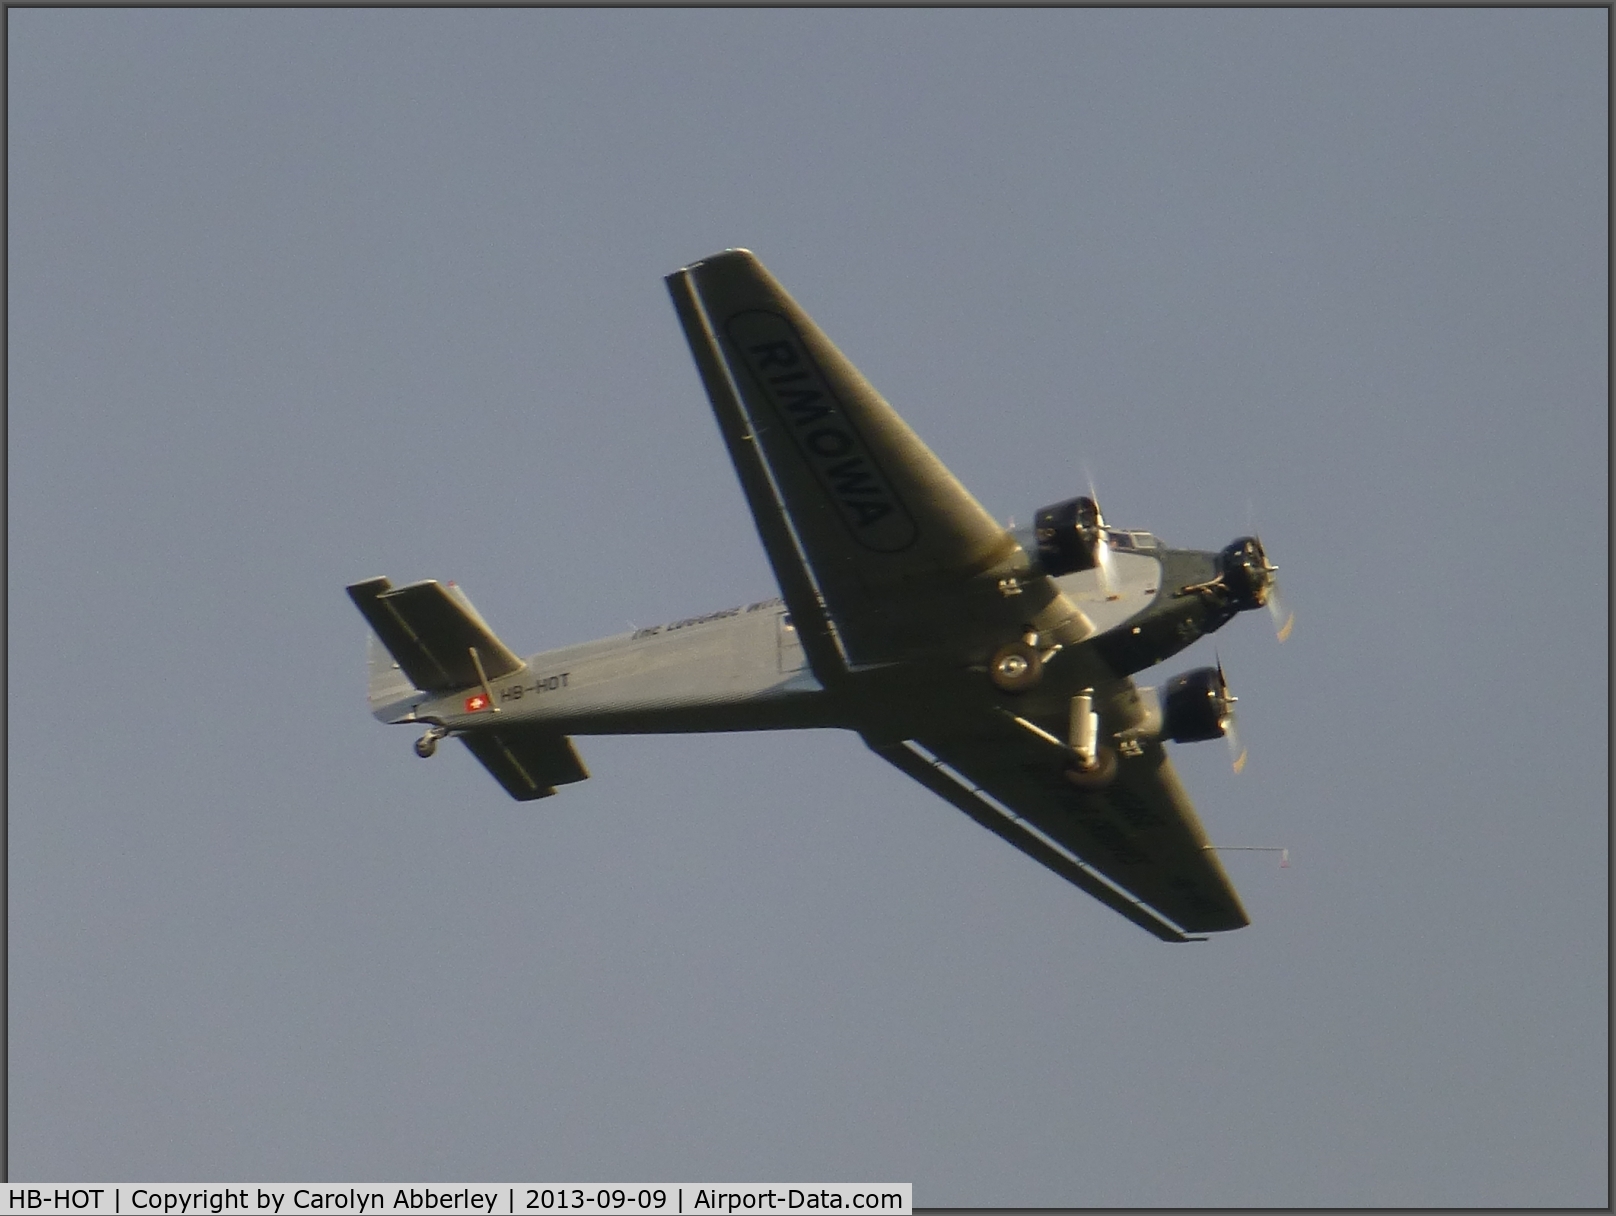 HB-HOT, 1939 Junkers Ju-52/3m g4e C/N 6595, In flight above Maidenhead, UK at c.18:30 9 September 2013.